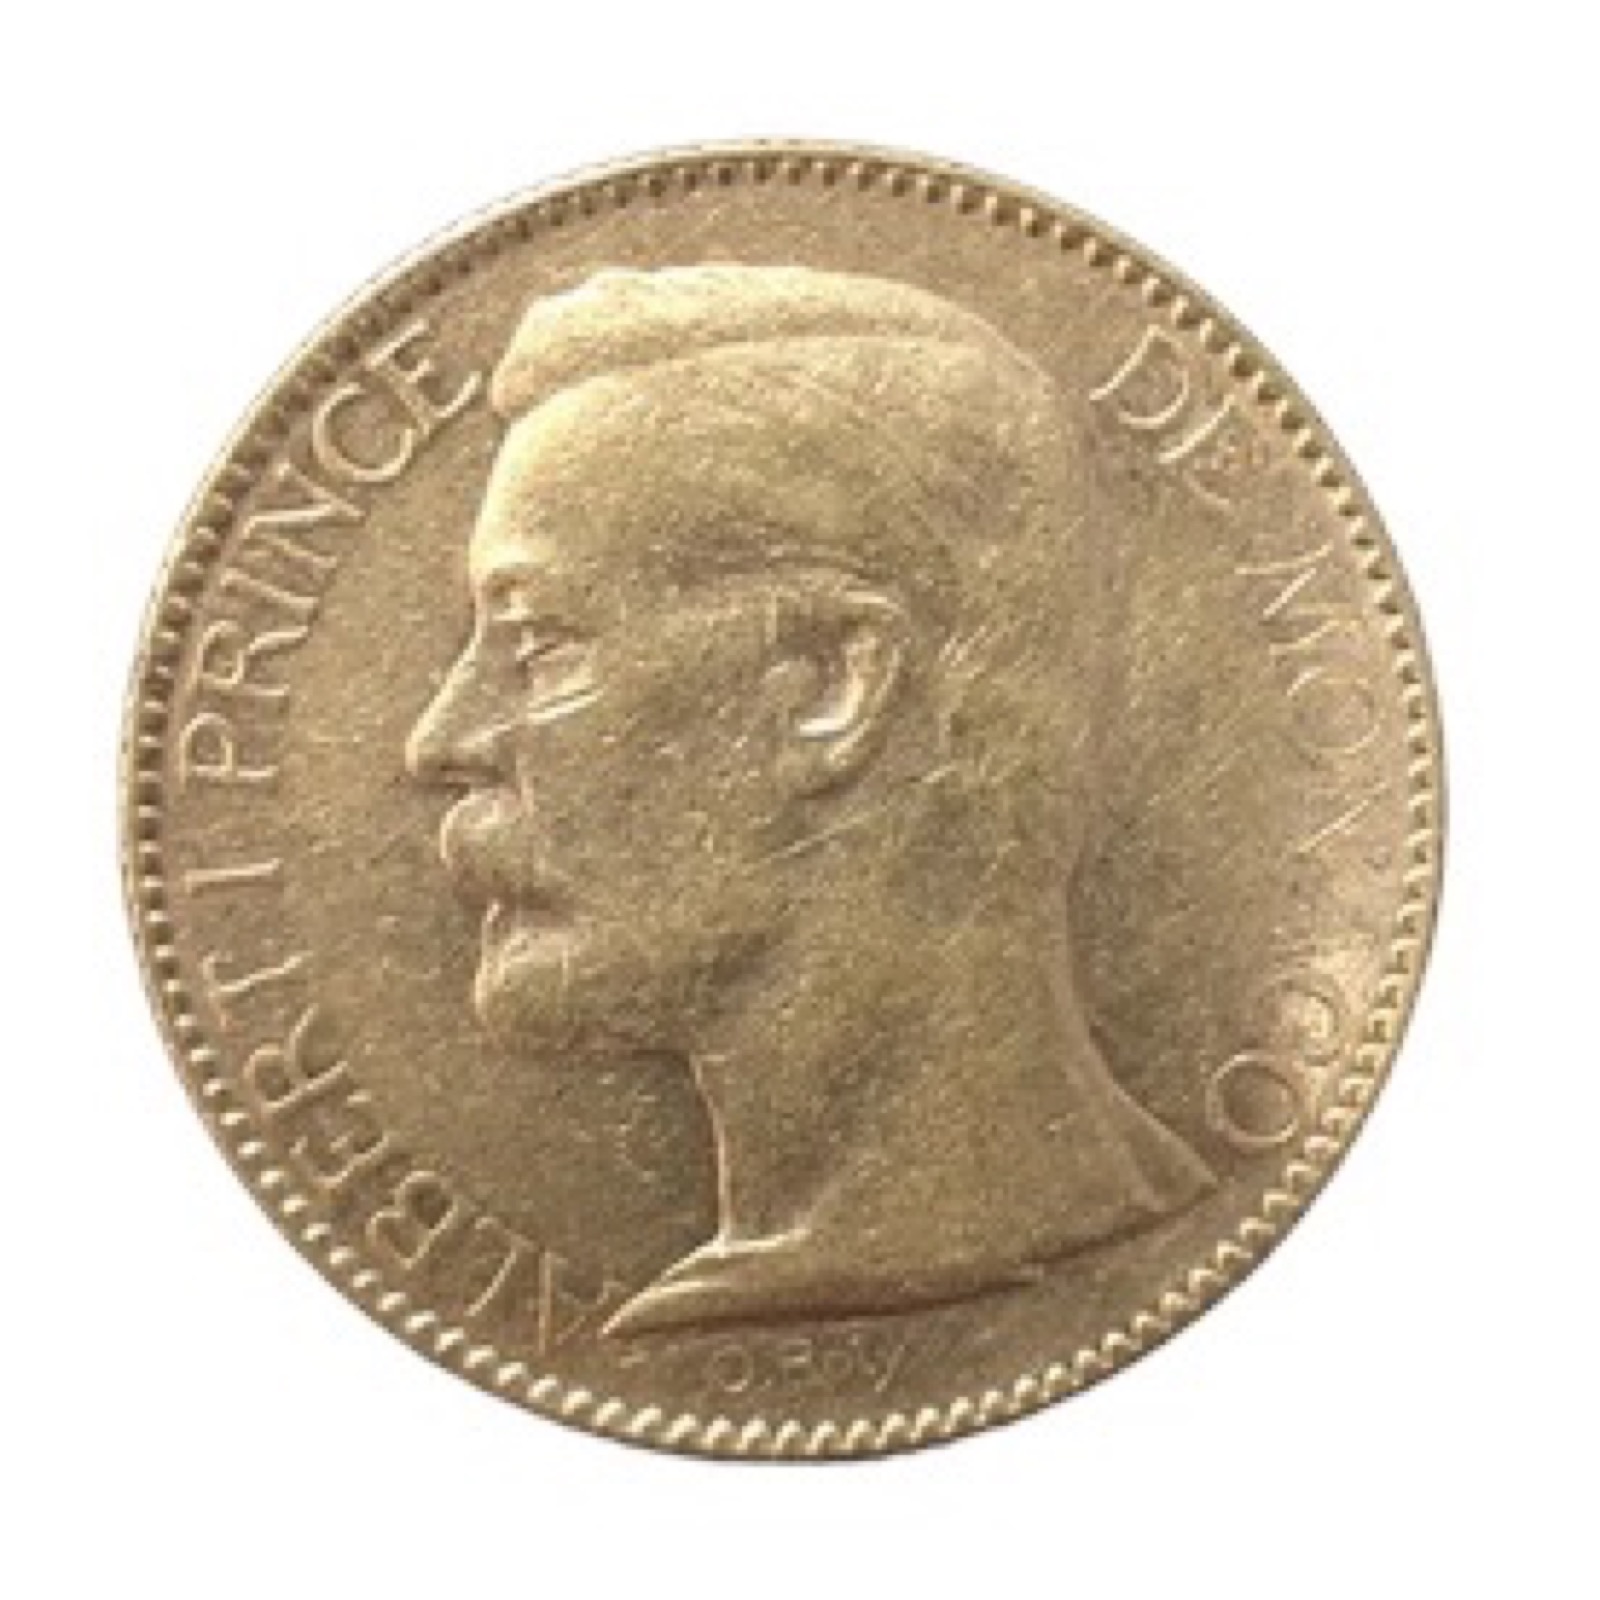 100 Francs Monaco Albert Ier 1901